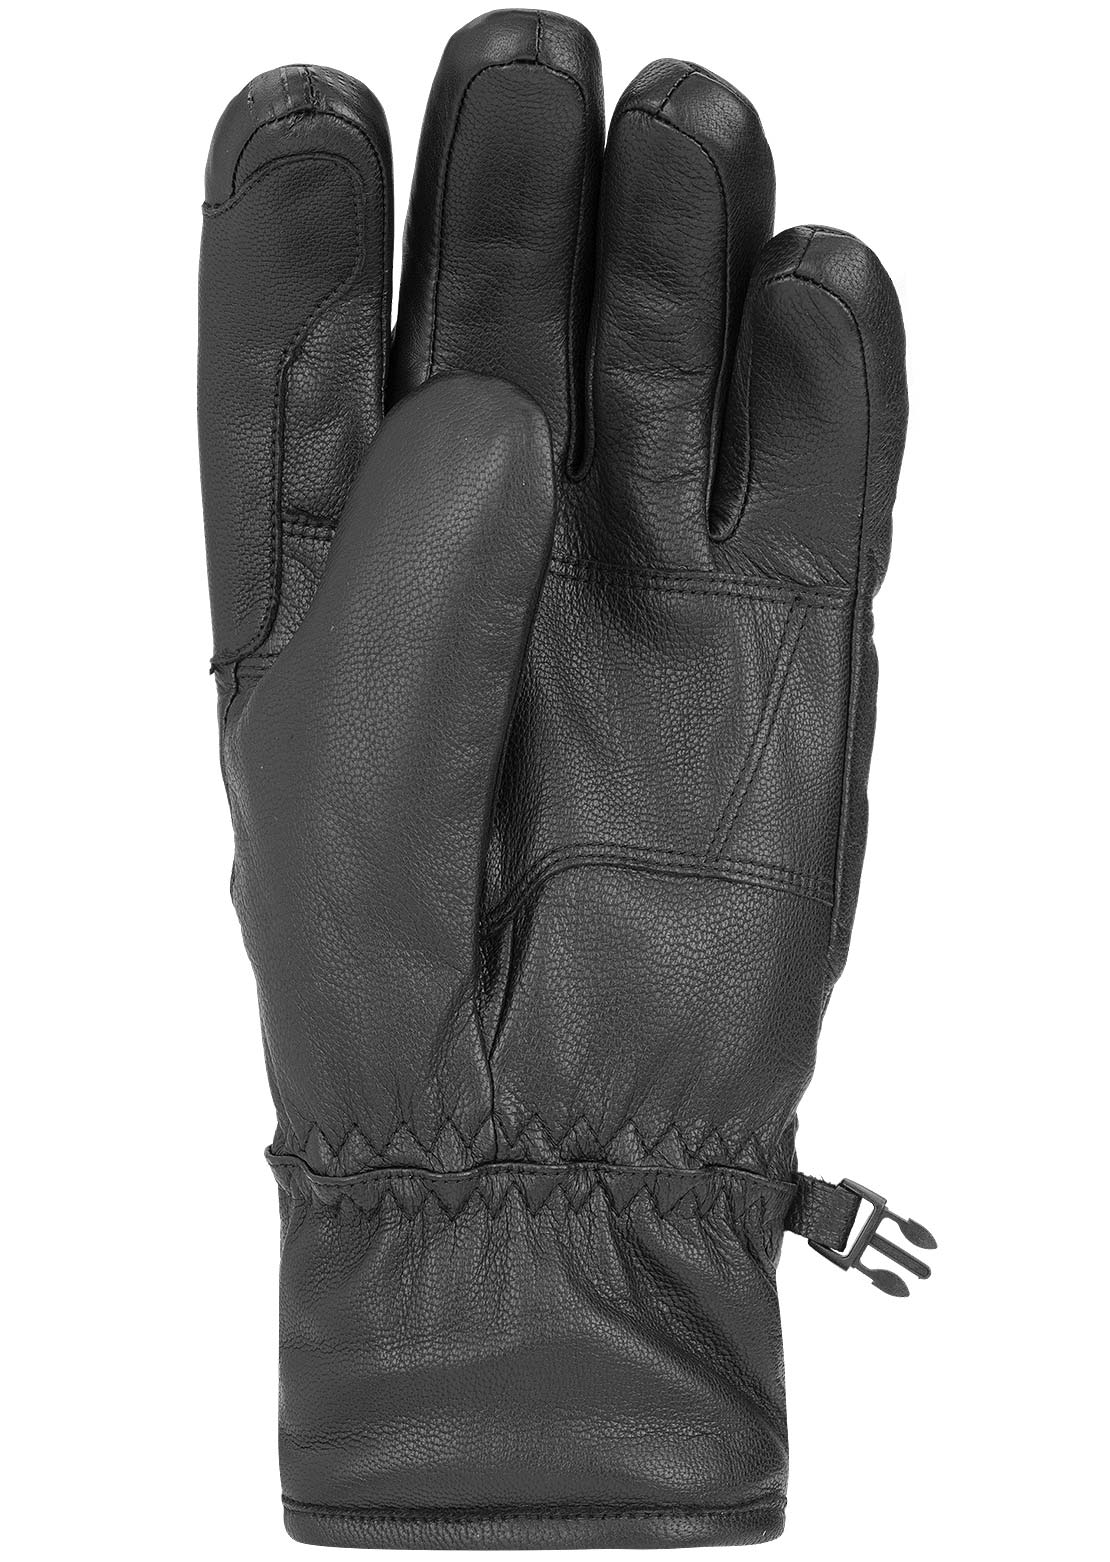 Auclair Son Of T 3 Gloves Black/Black